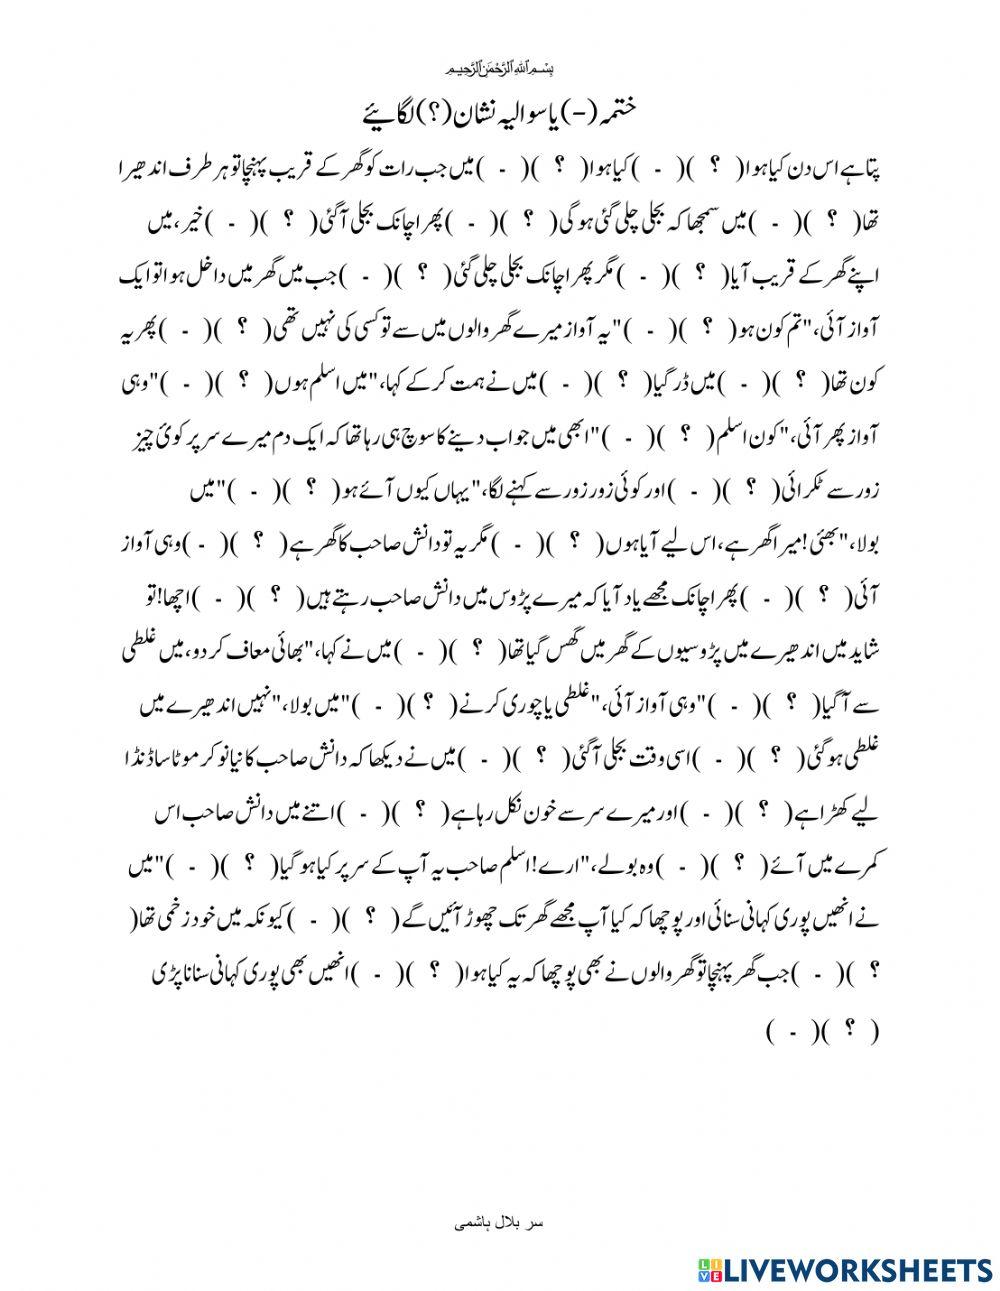 Urdu Punctuation ختمہ اور سوالیہ نشان